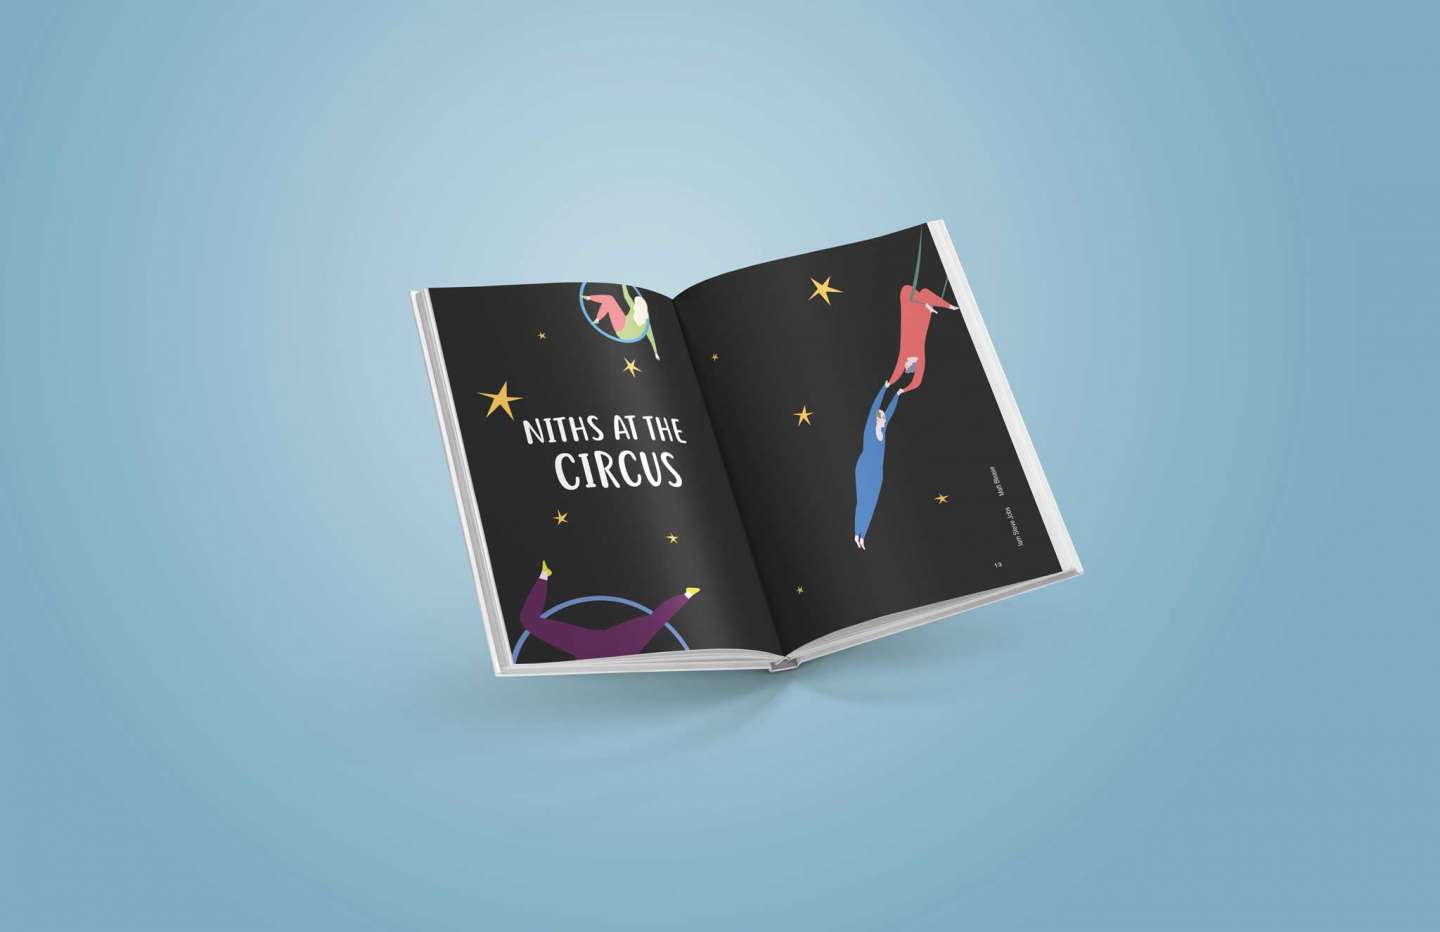 Steve Jobs Illustration Book Design